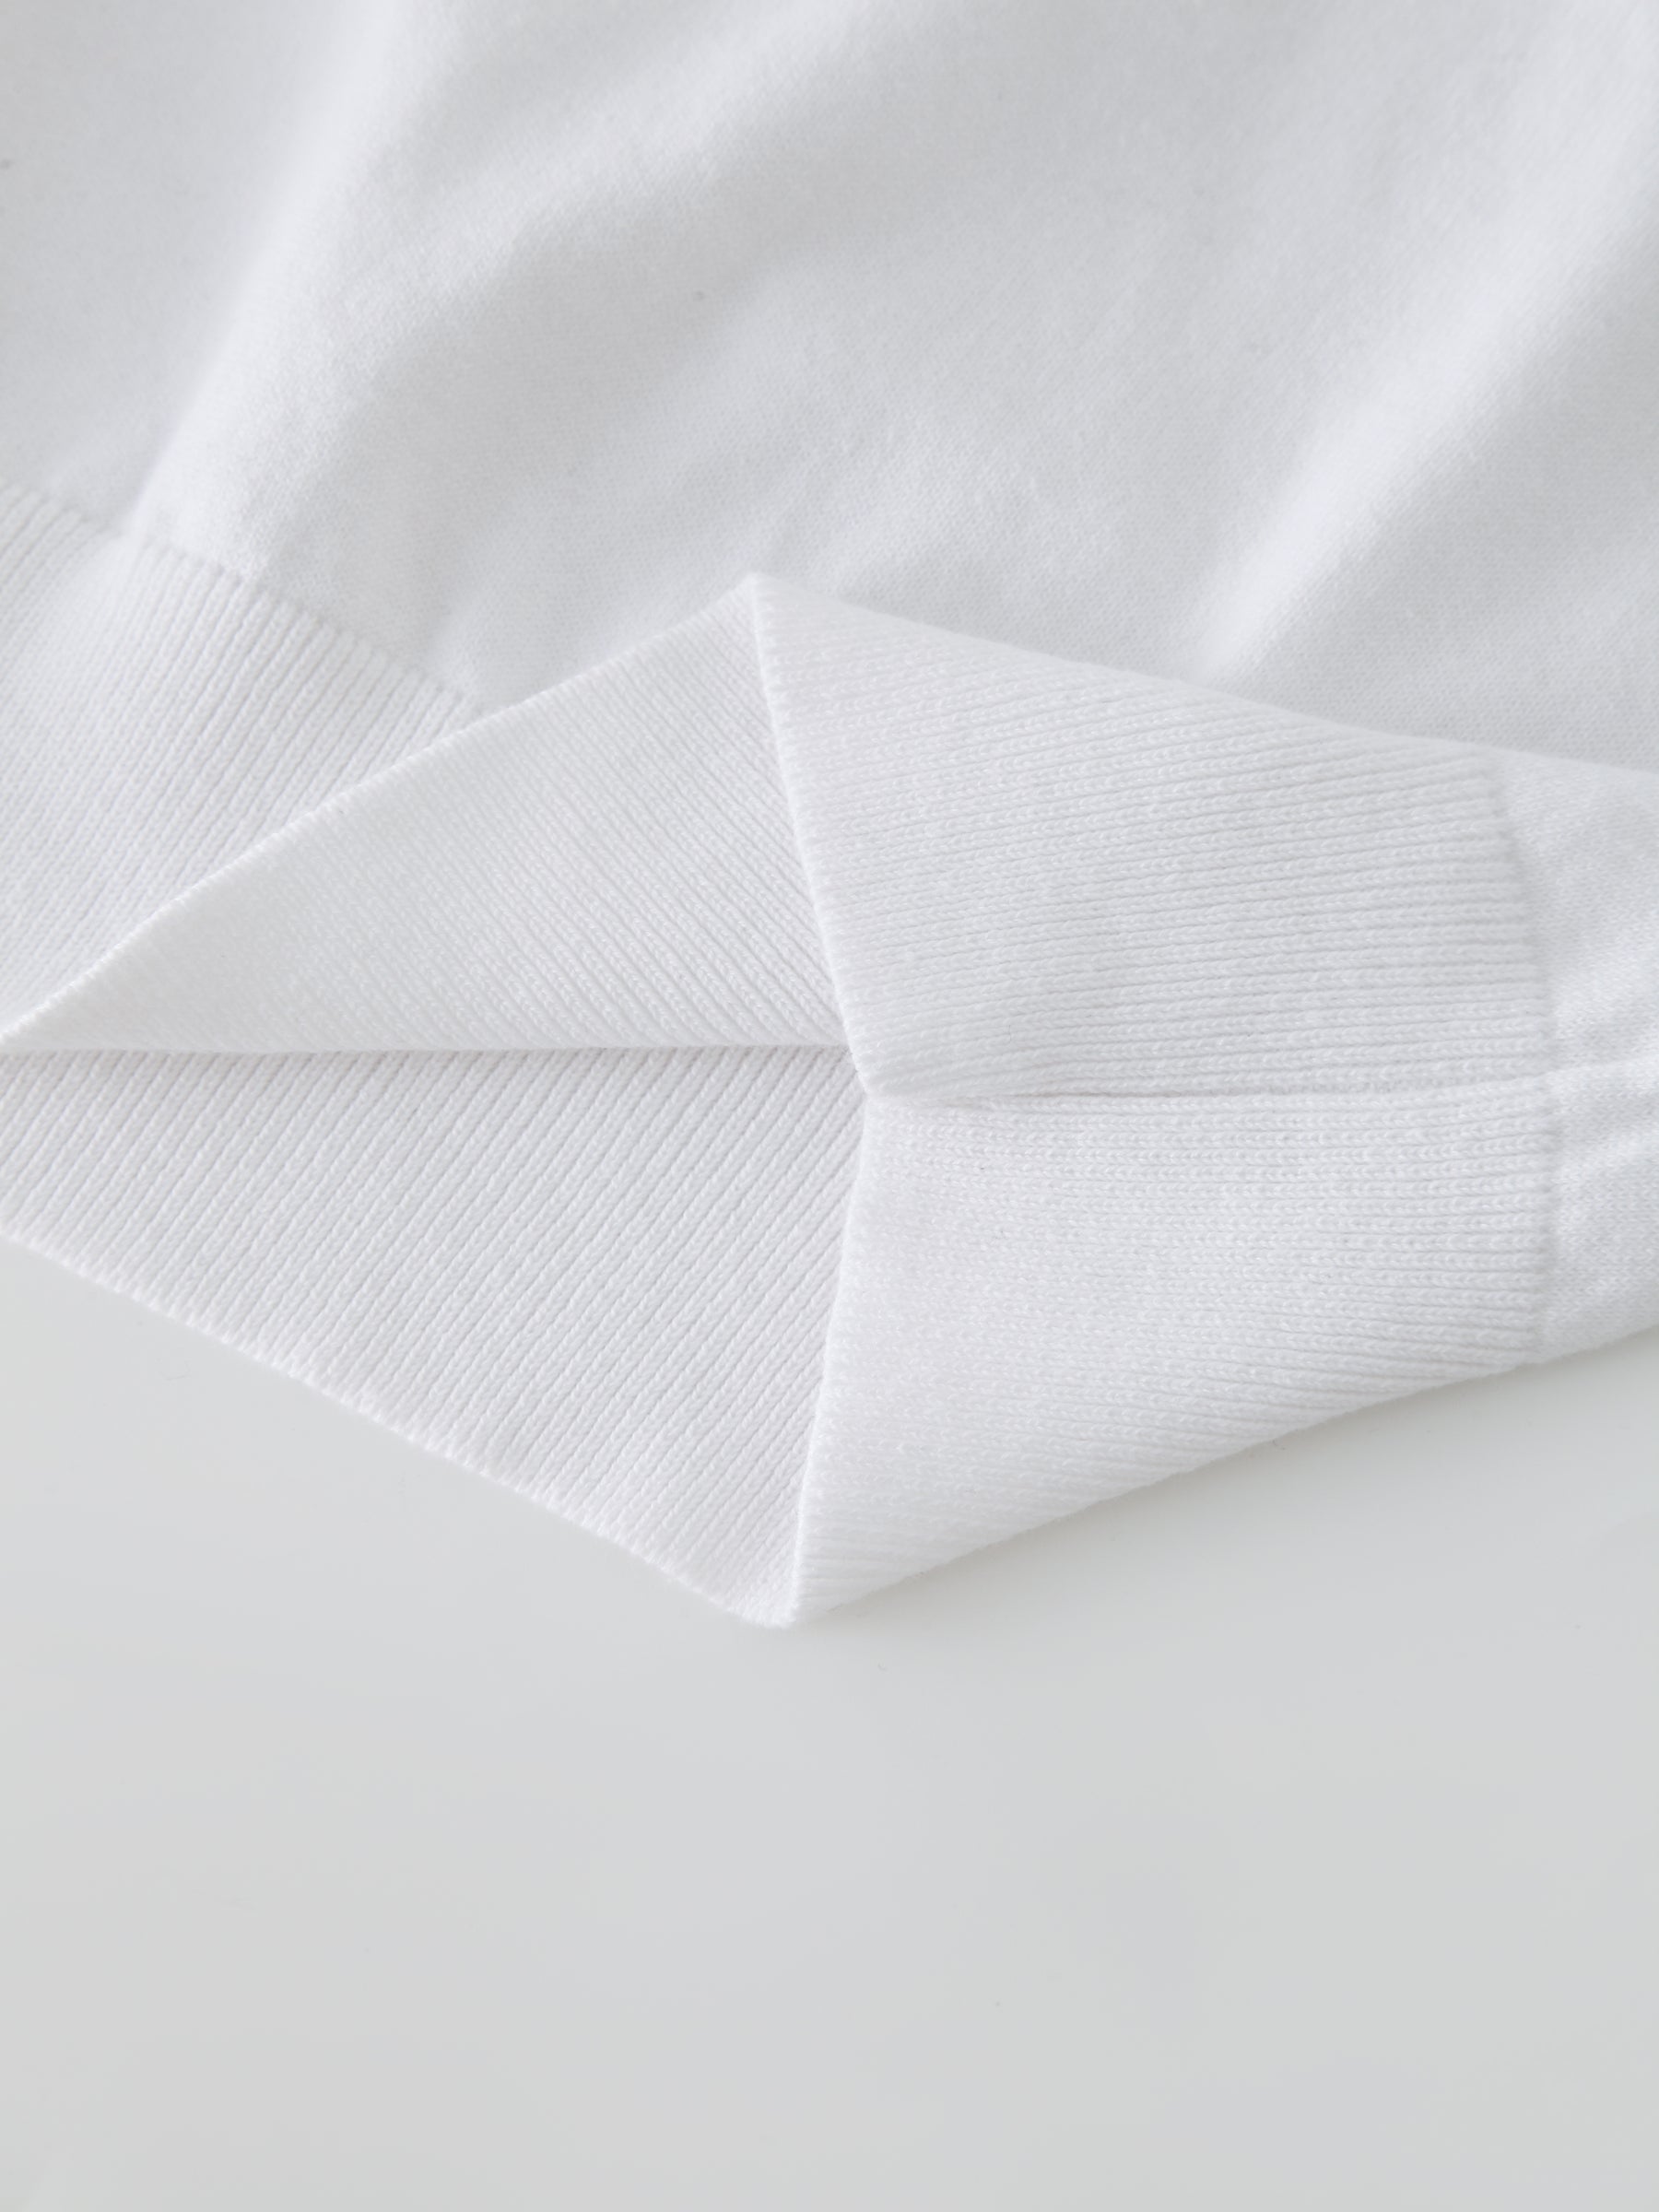 Jersey de malla con parte superior-Blanco